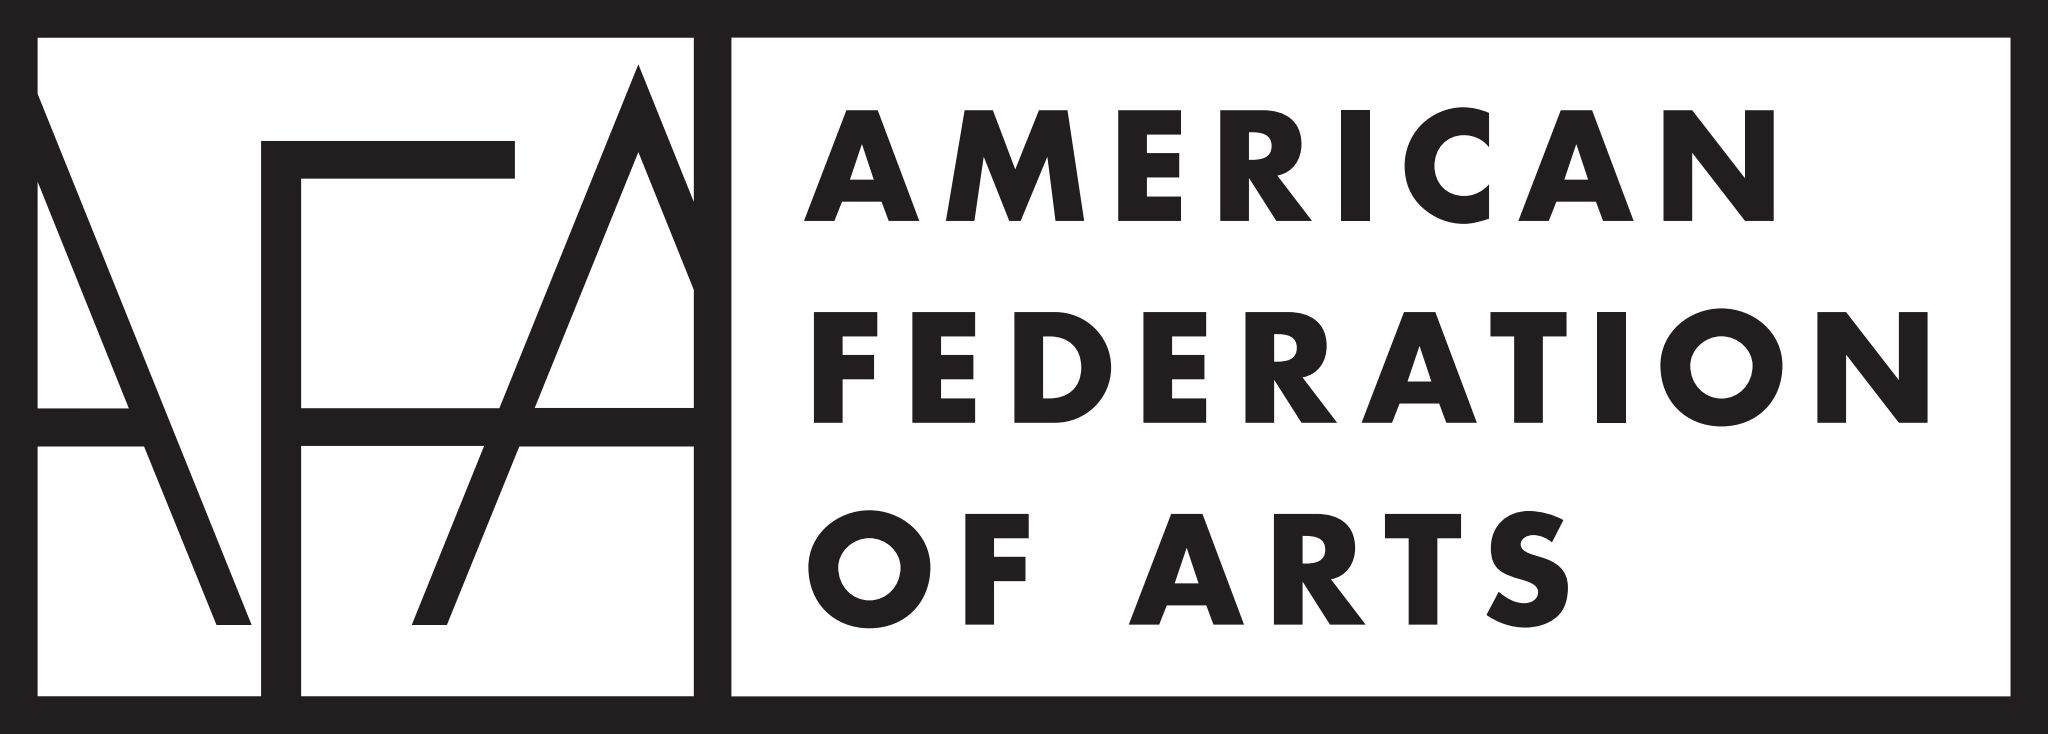 American Federation of Arts logo